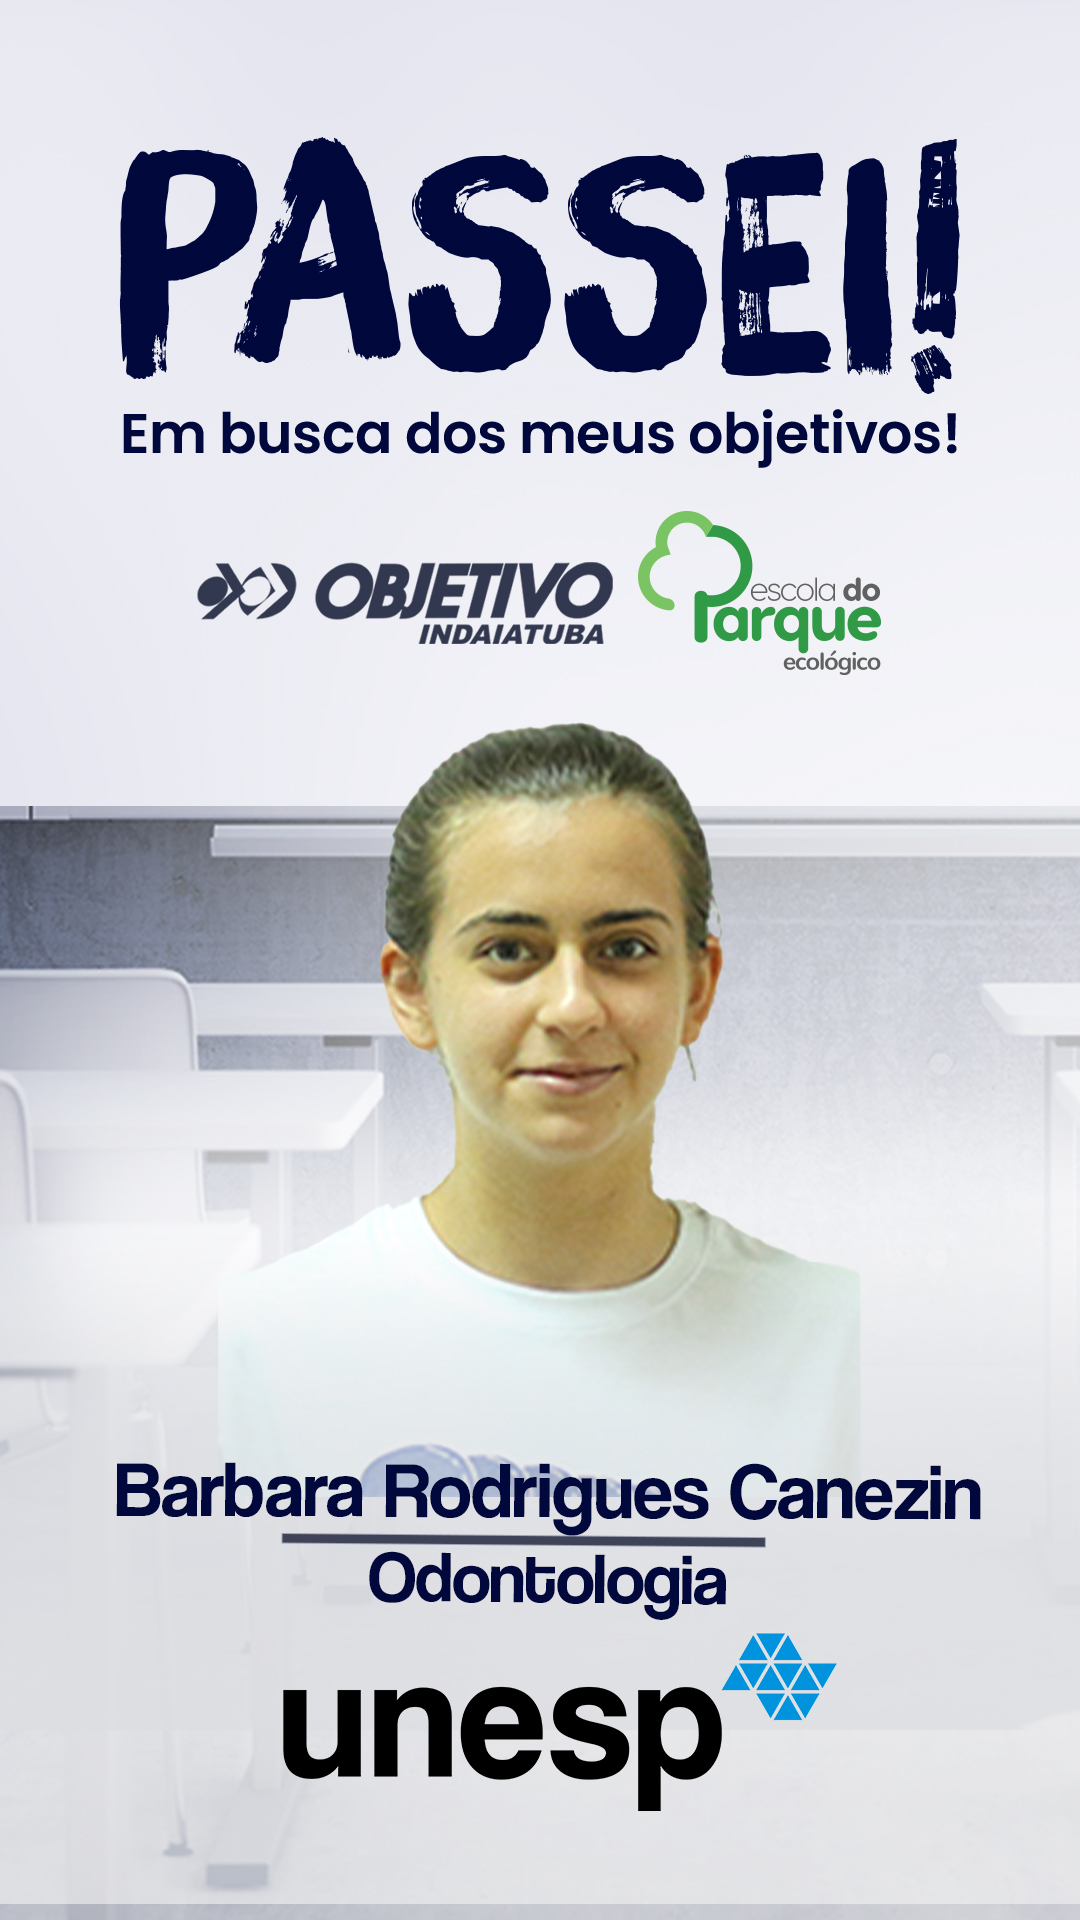 Barbara Rodrigues Canezin